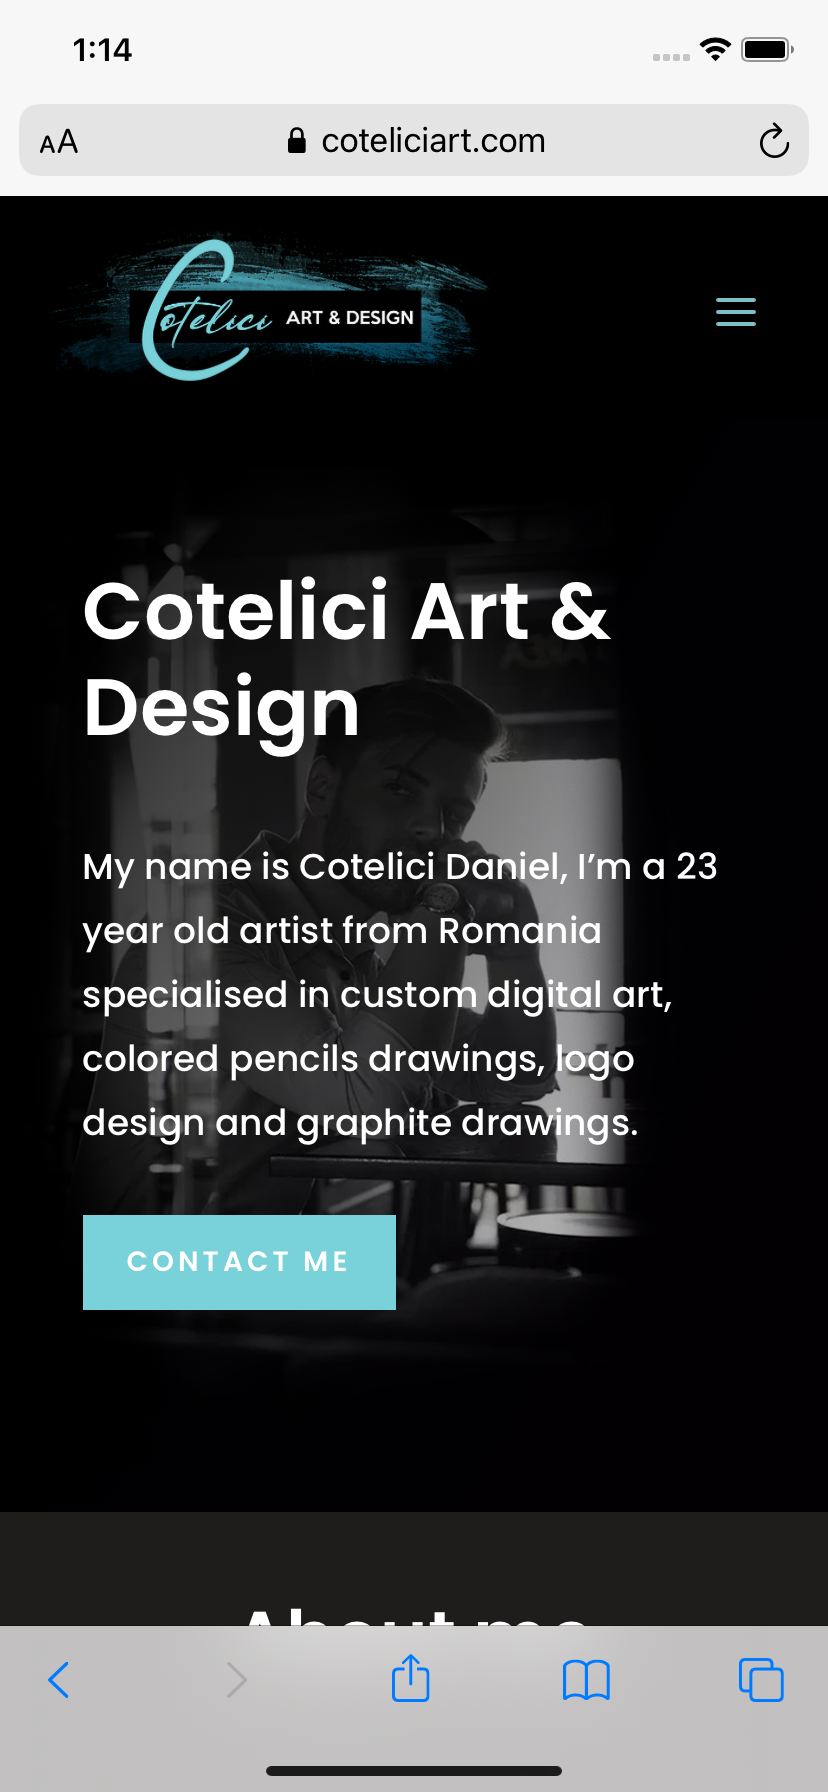 Cotelici Art & Design - Mobile - Homepage - Header